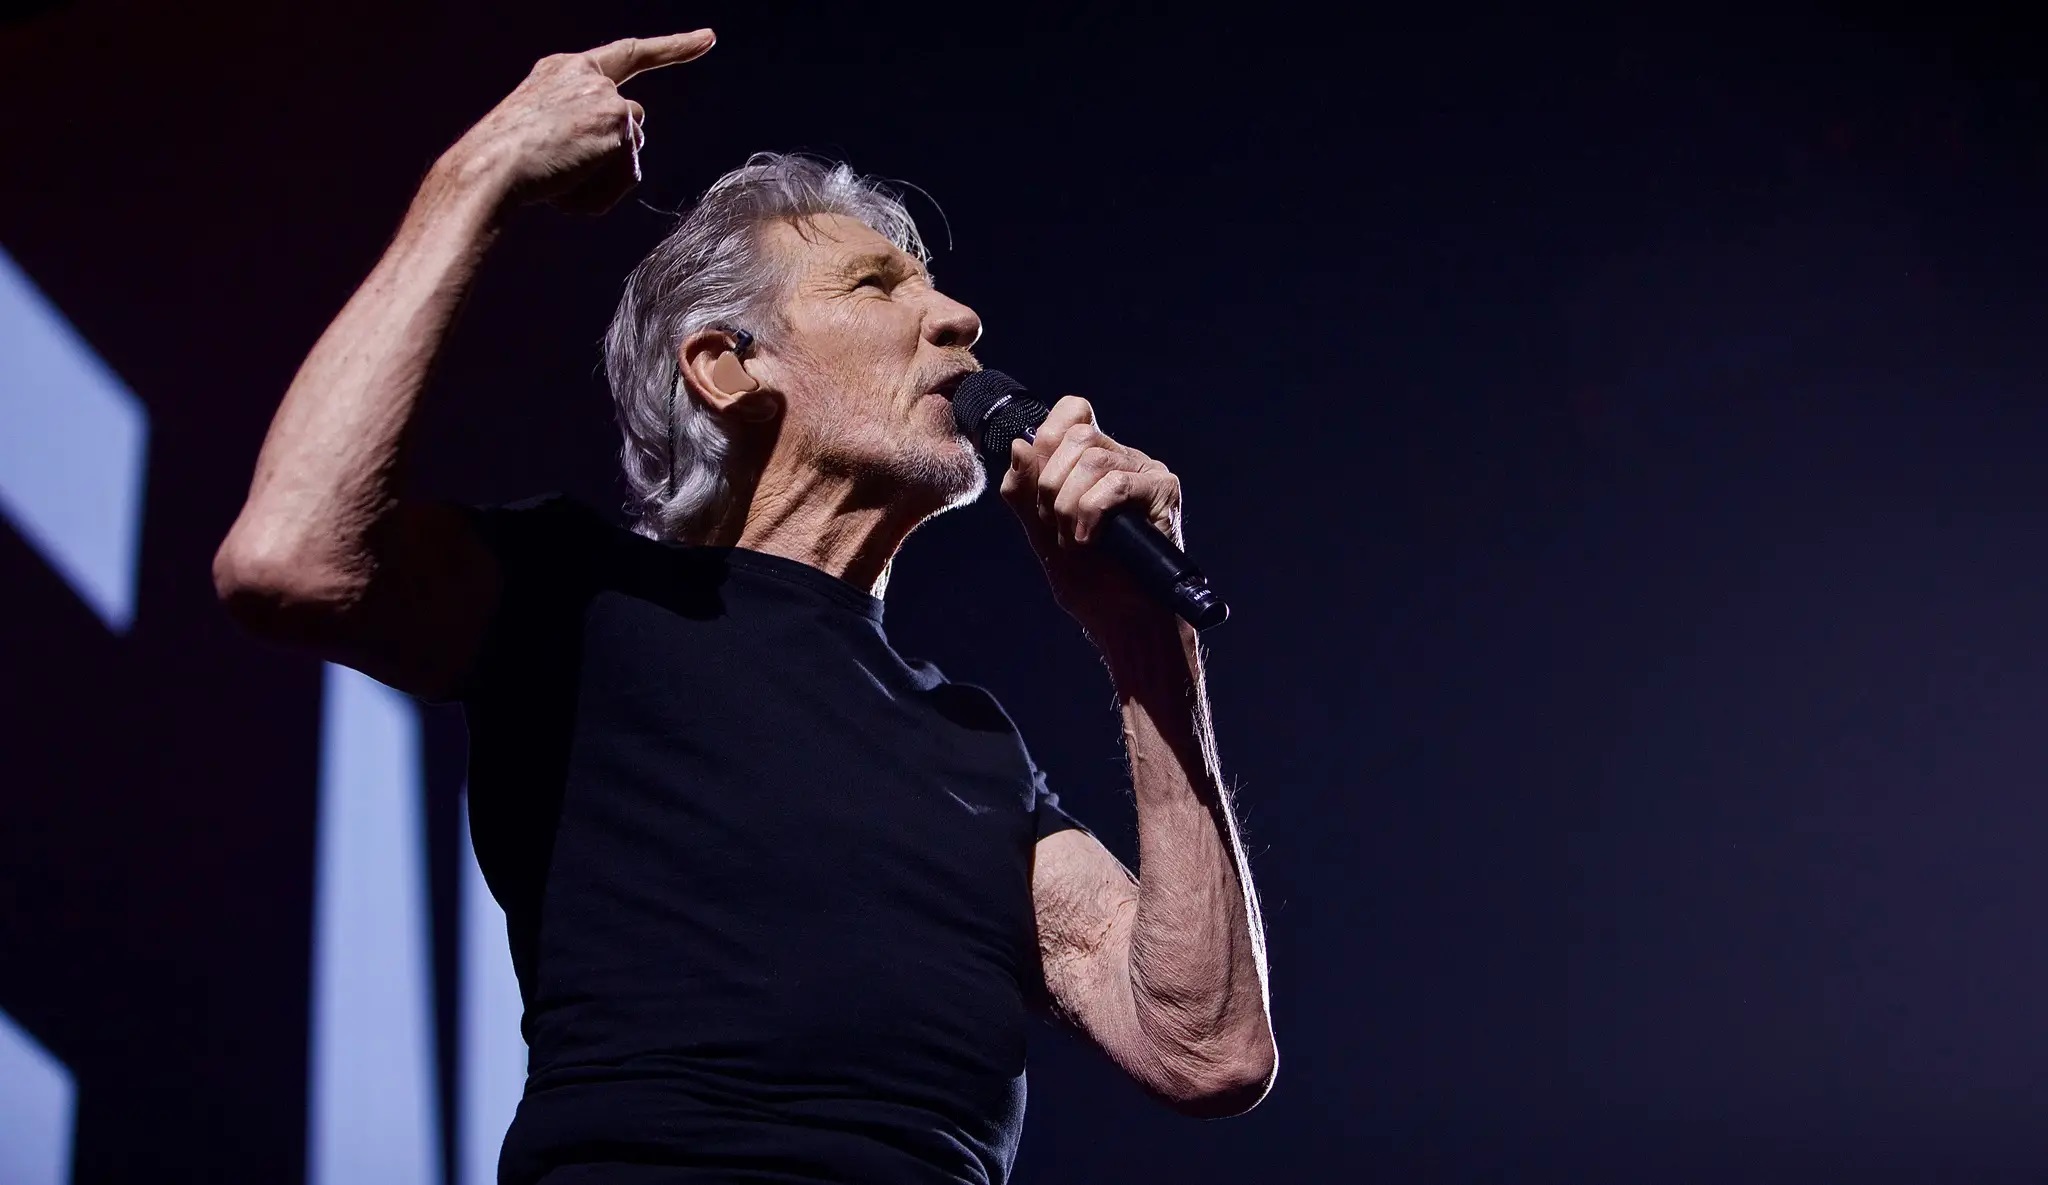 Roger Waters - photo by Jake Cudek